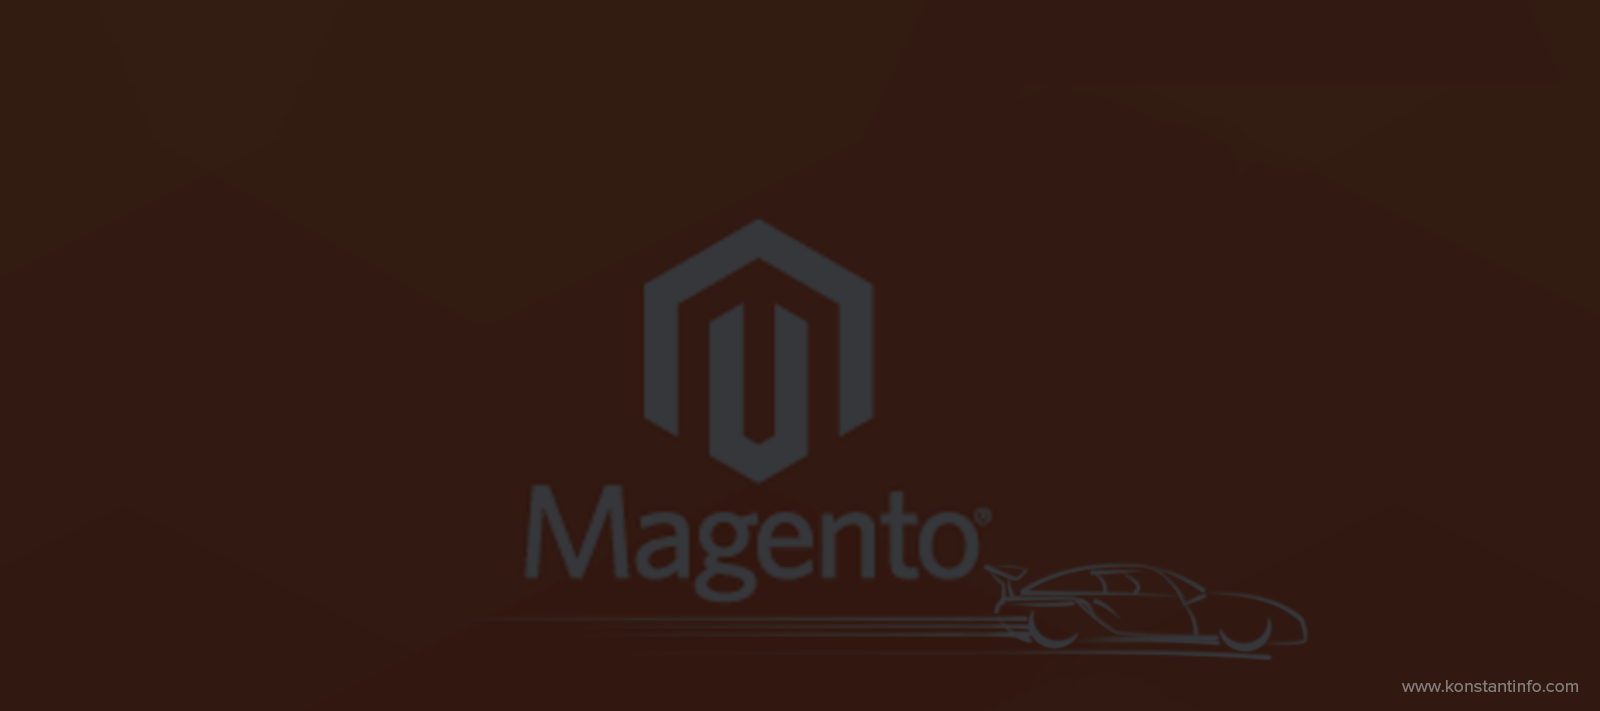 Infographic - Magento: Fastest Growing eCommerce Platform